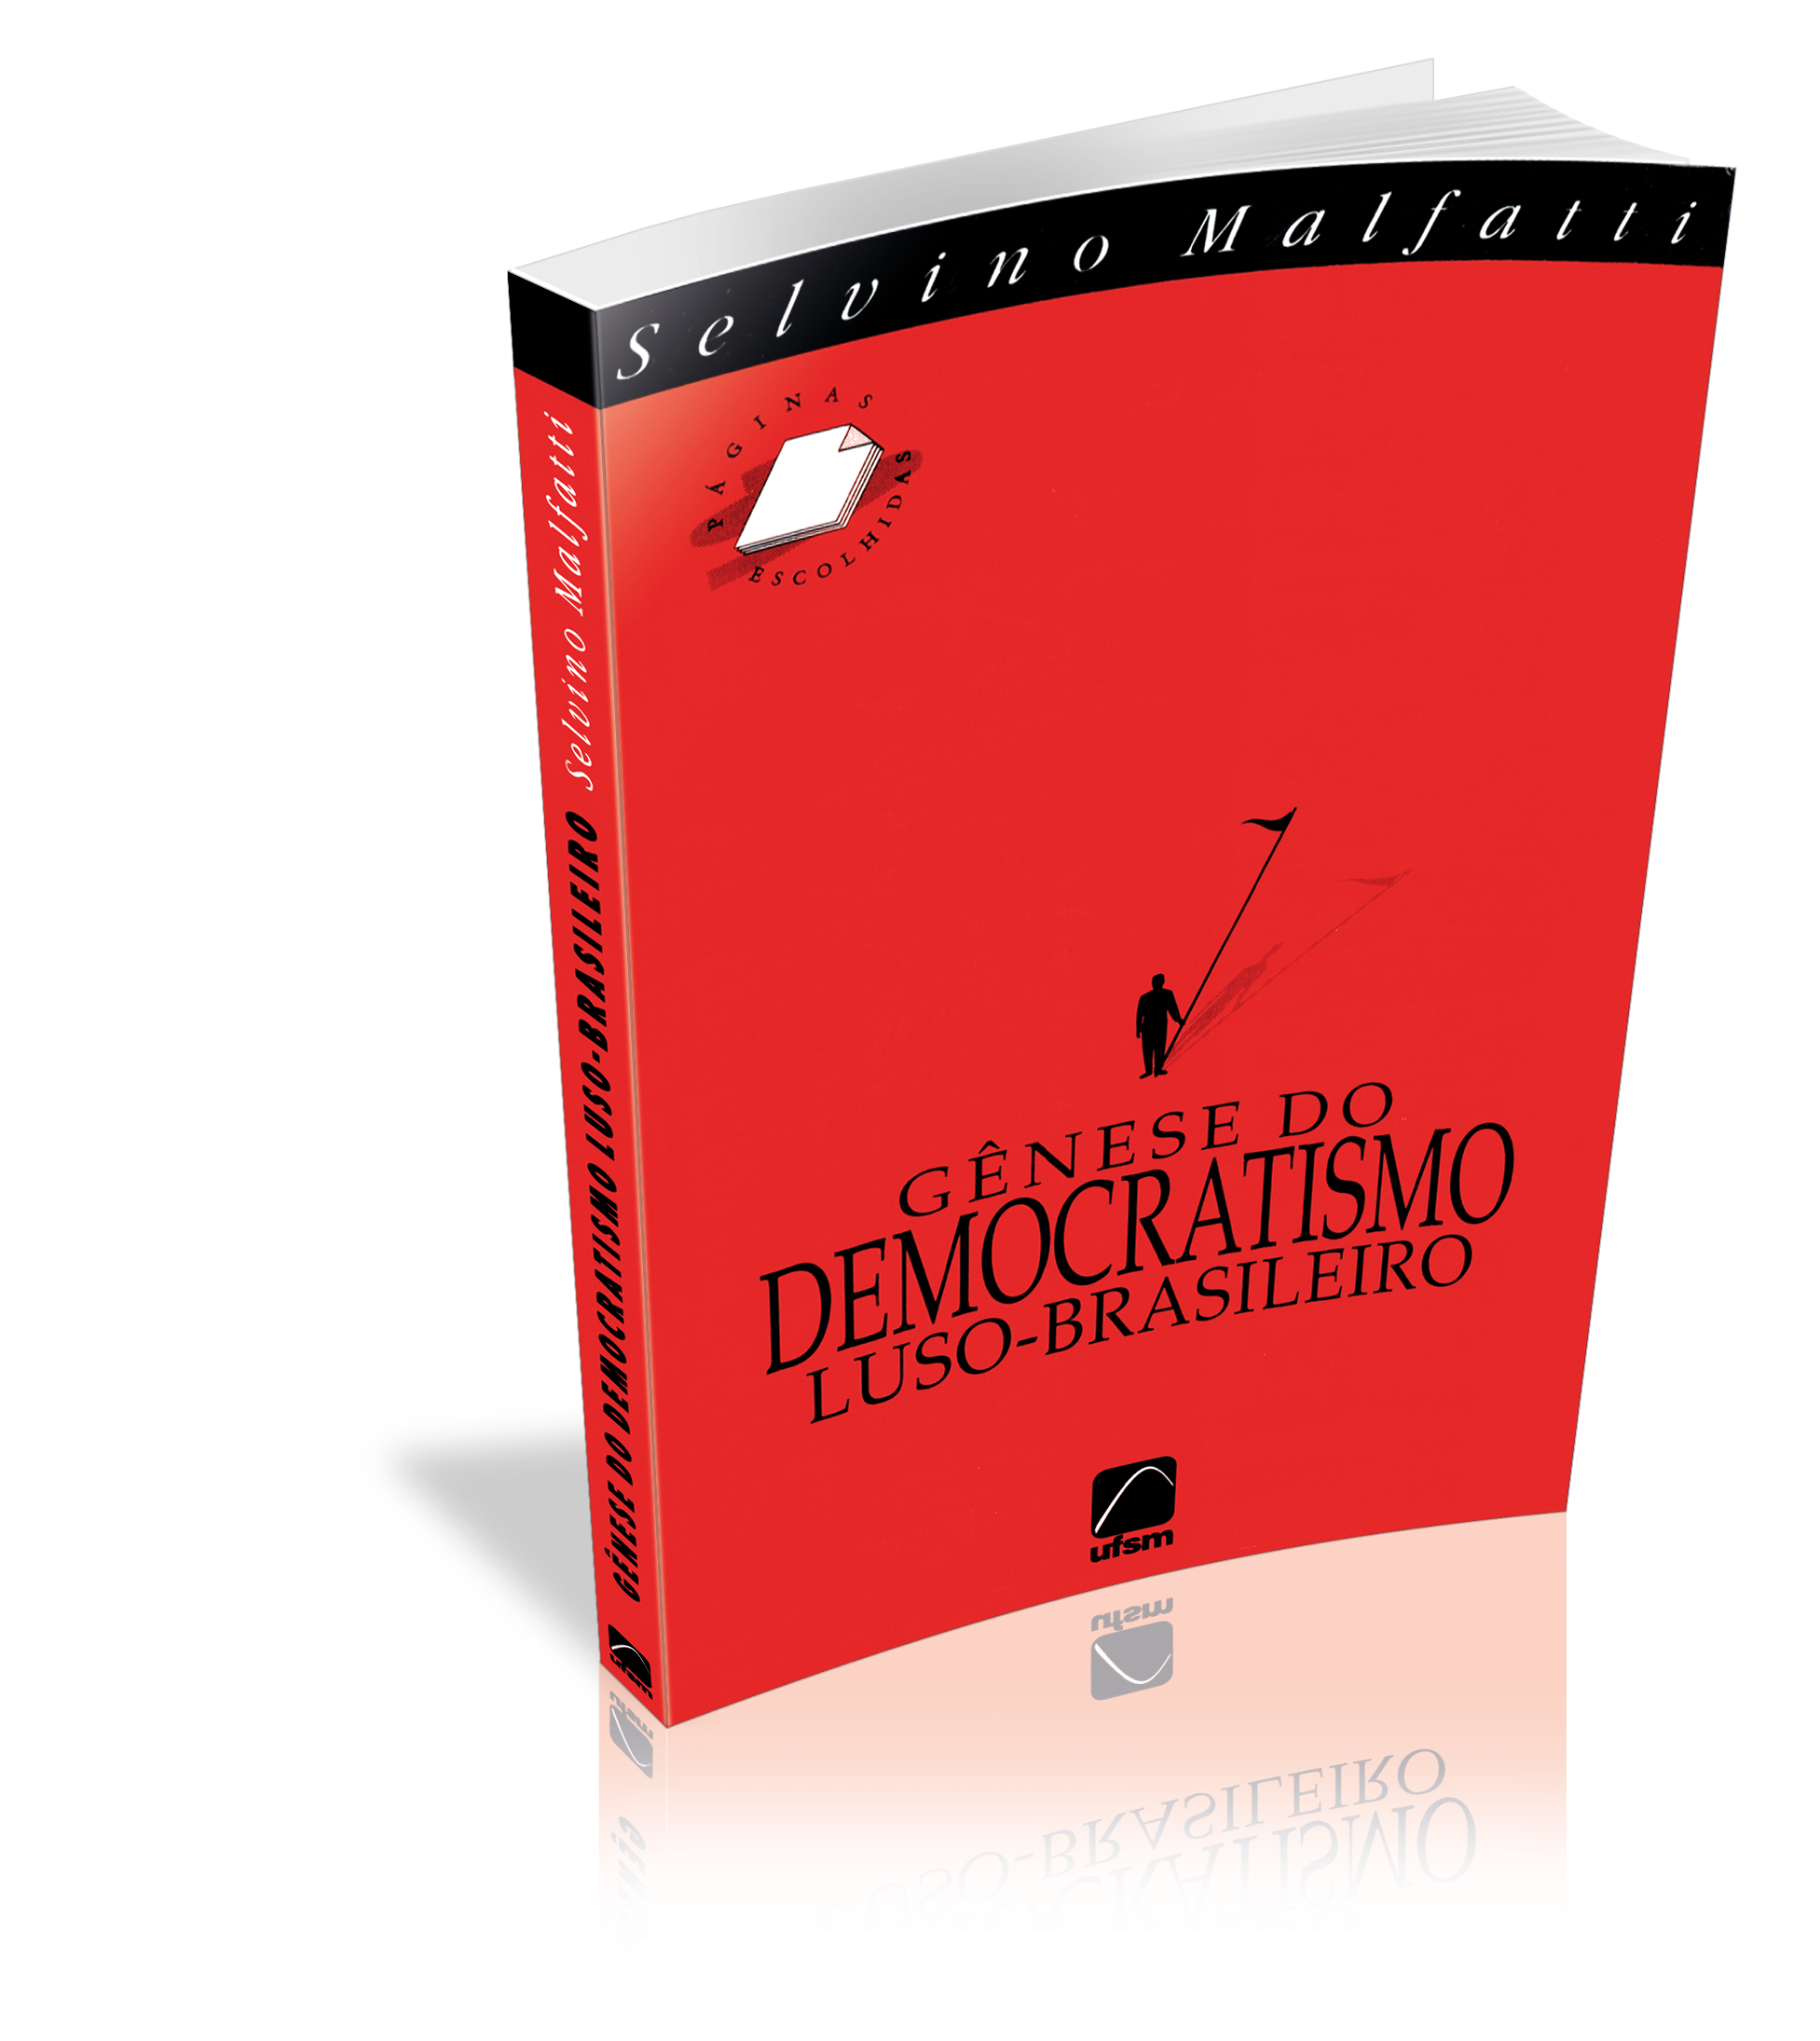 Capa do livro Gênese do Democratismo Luso-Brasileiro